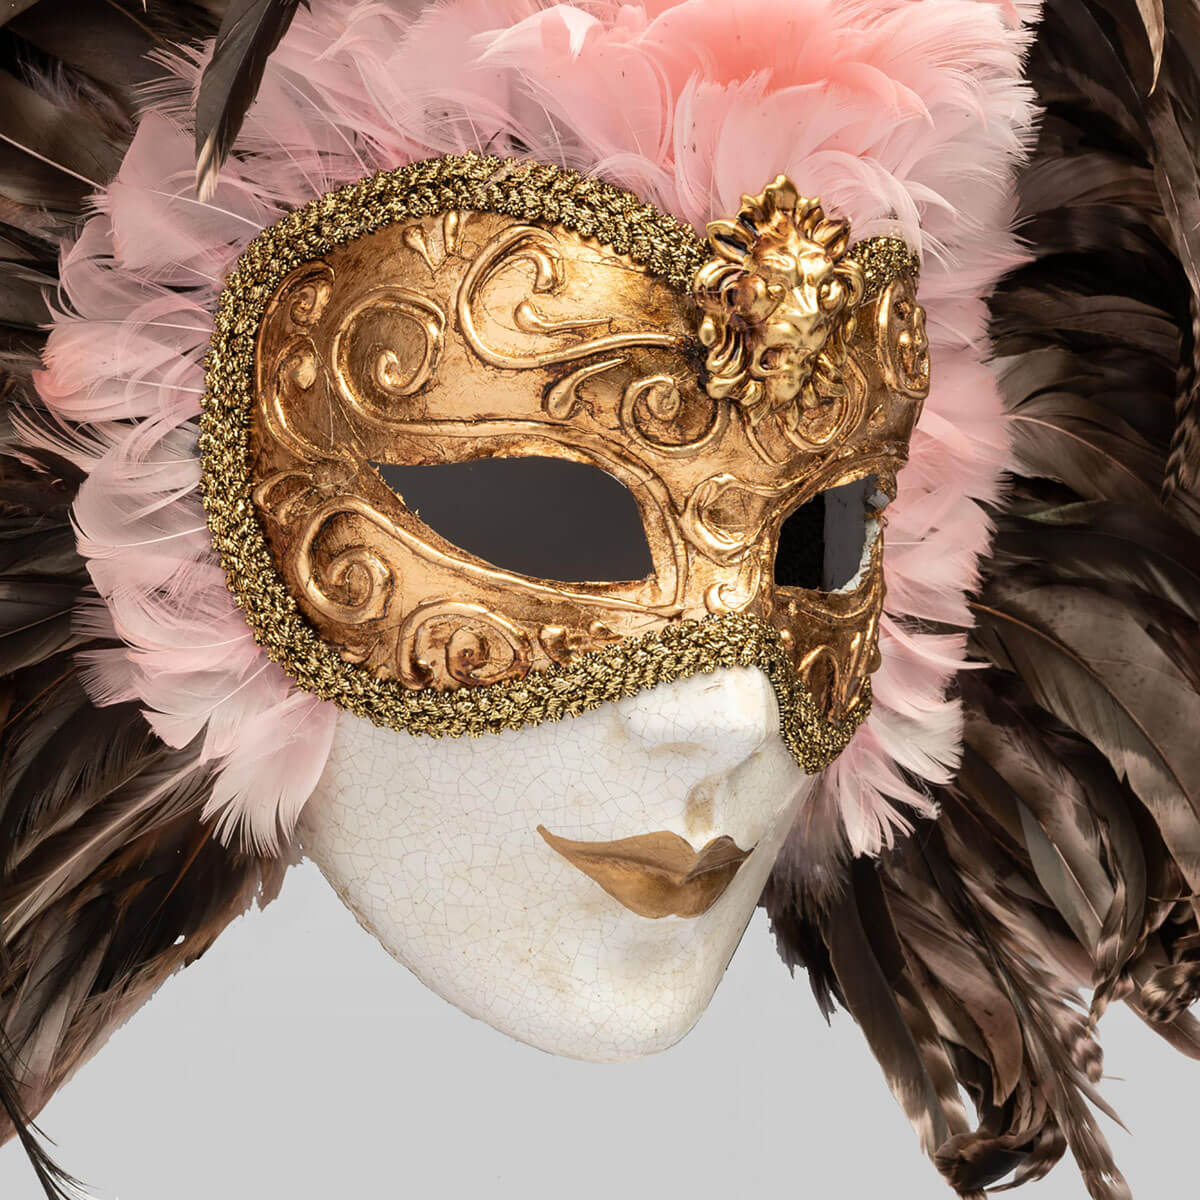 Jolly Venetian Mask, Carnival Mask, Handmade in Papier-mâché